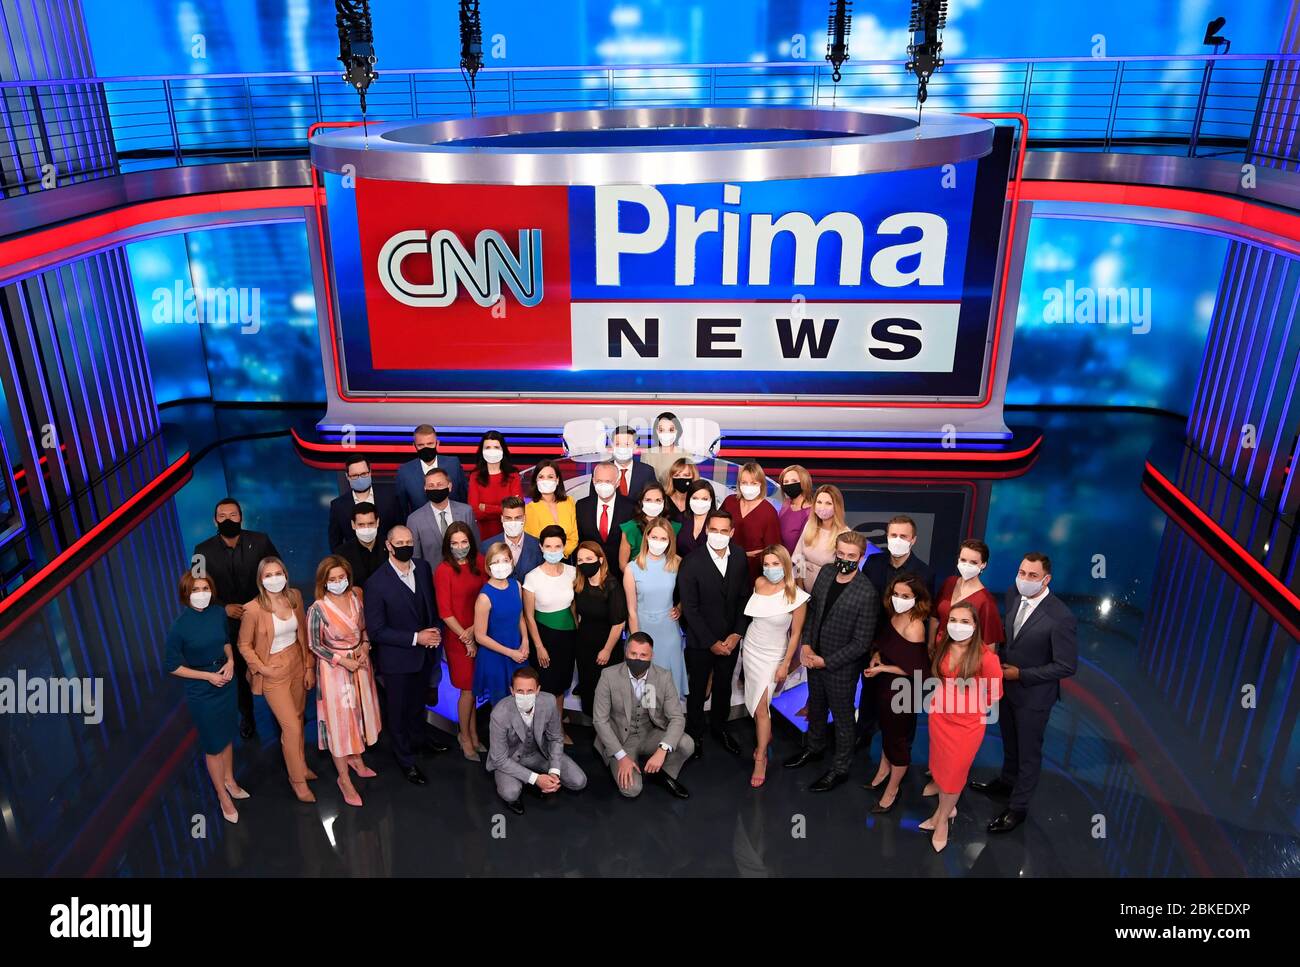 Prague, Czech Republic. 03rd May, 2020. Czech TV group Prima is launching  its new channel CNN